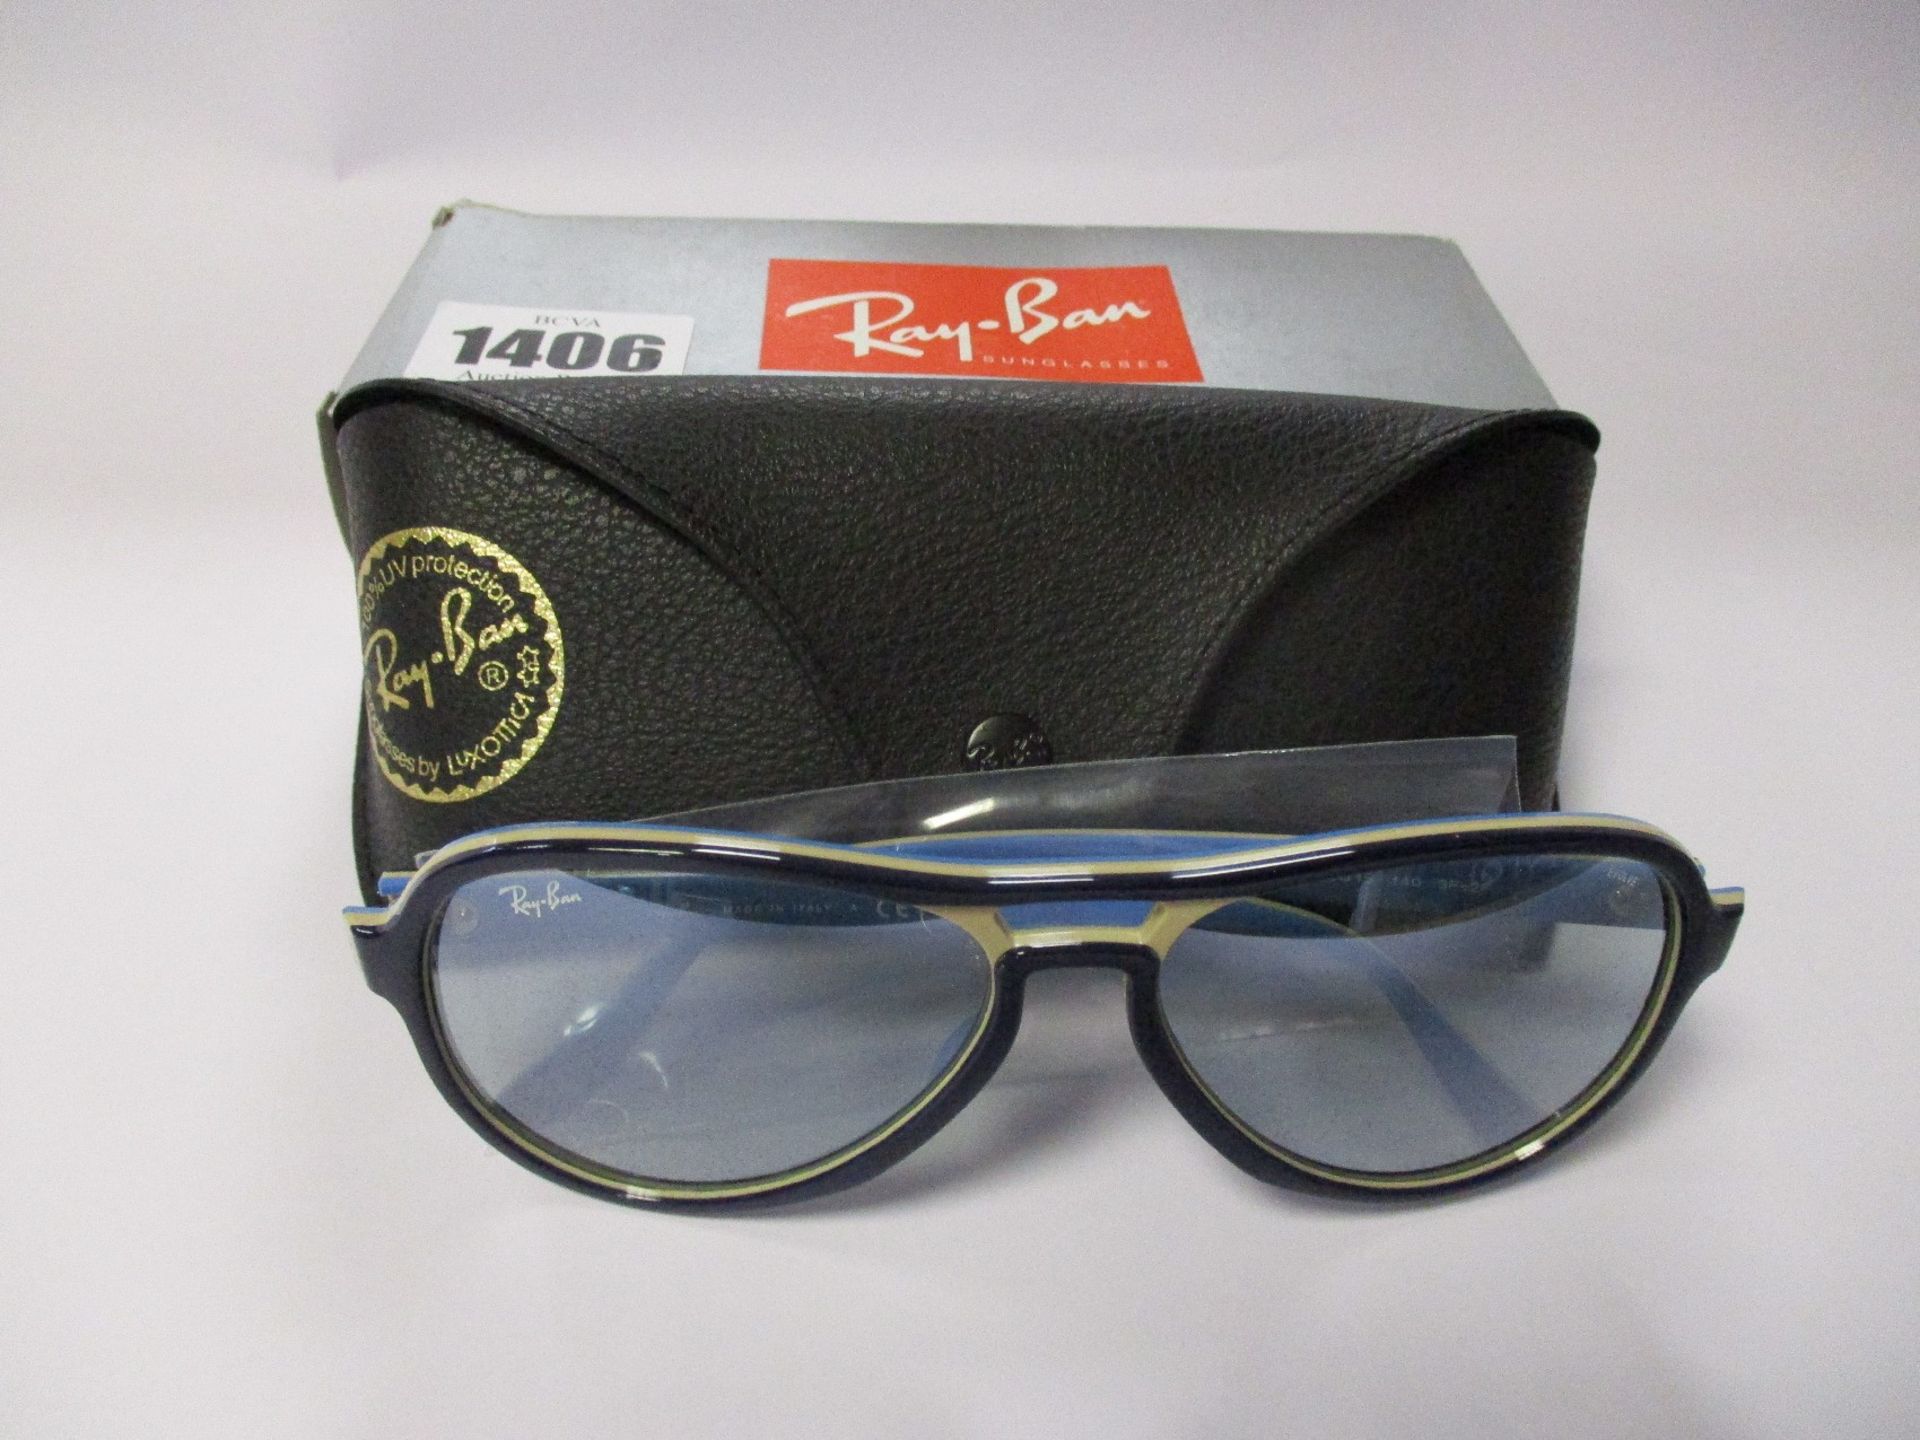 A pair of as new Ray Ban Vagabond sunglasses.